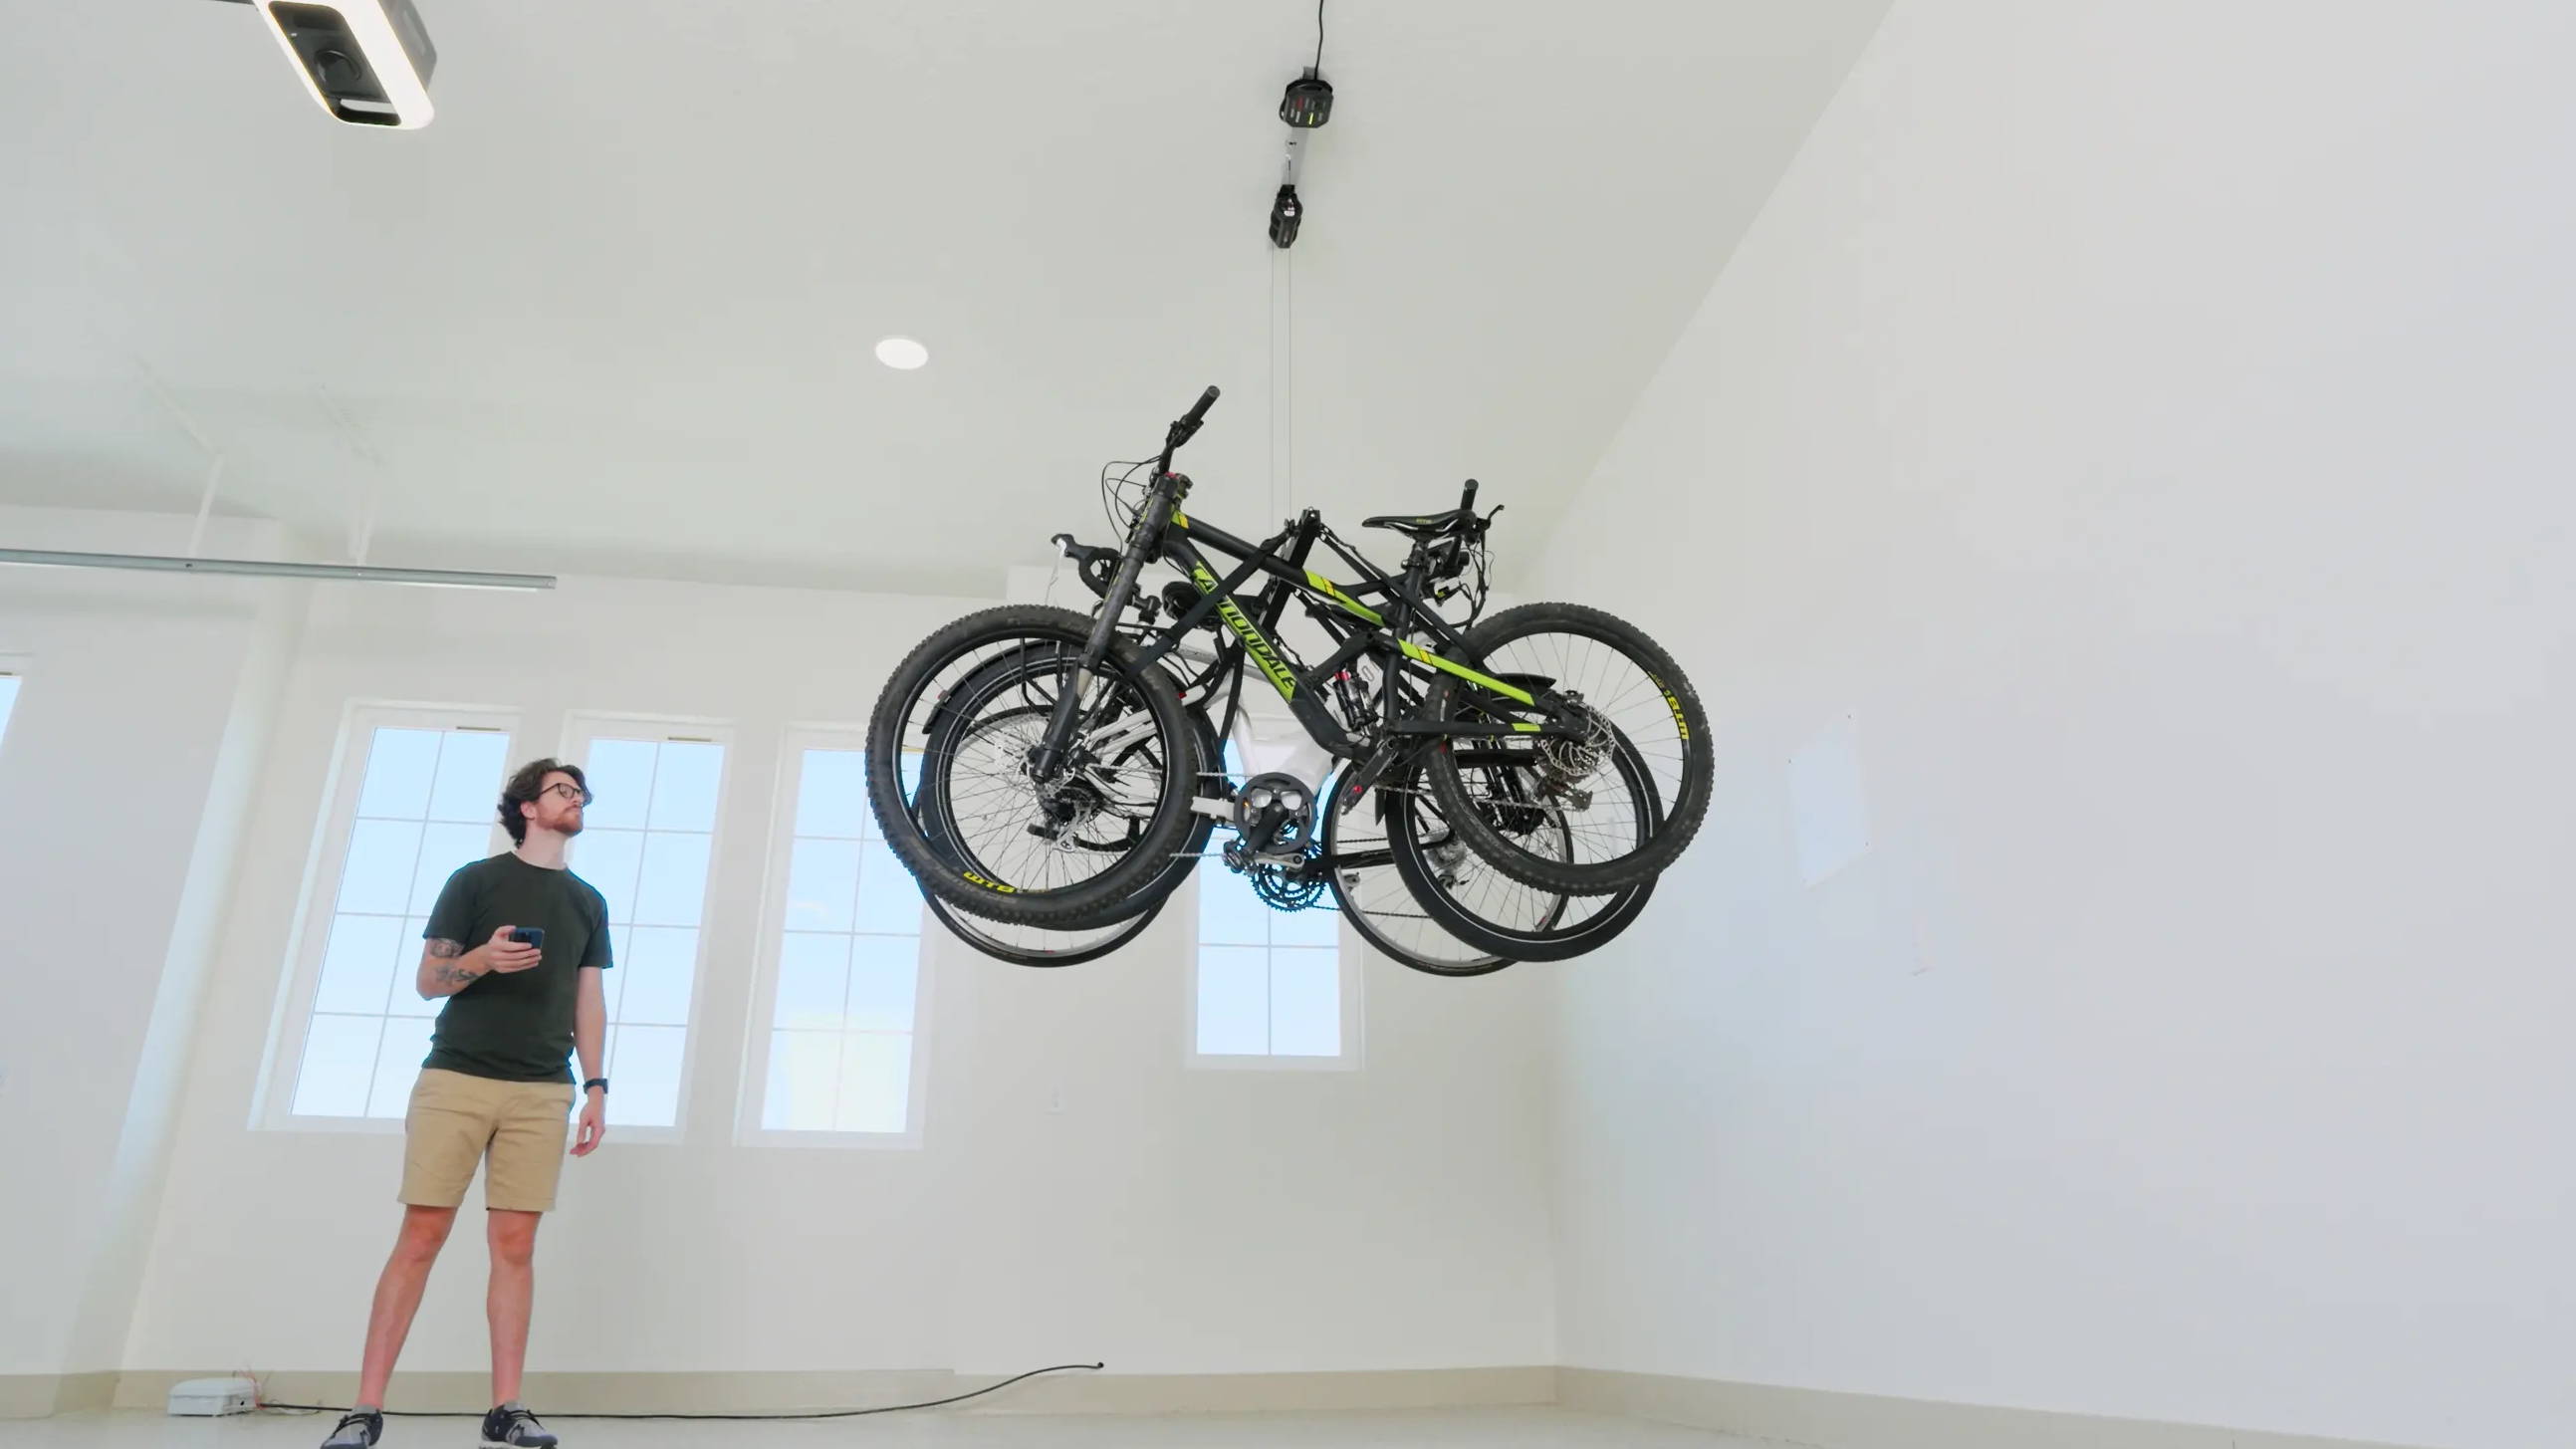 SmarterHome Multi-Bike Lifter lifting 3 bikes in a garage